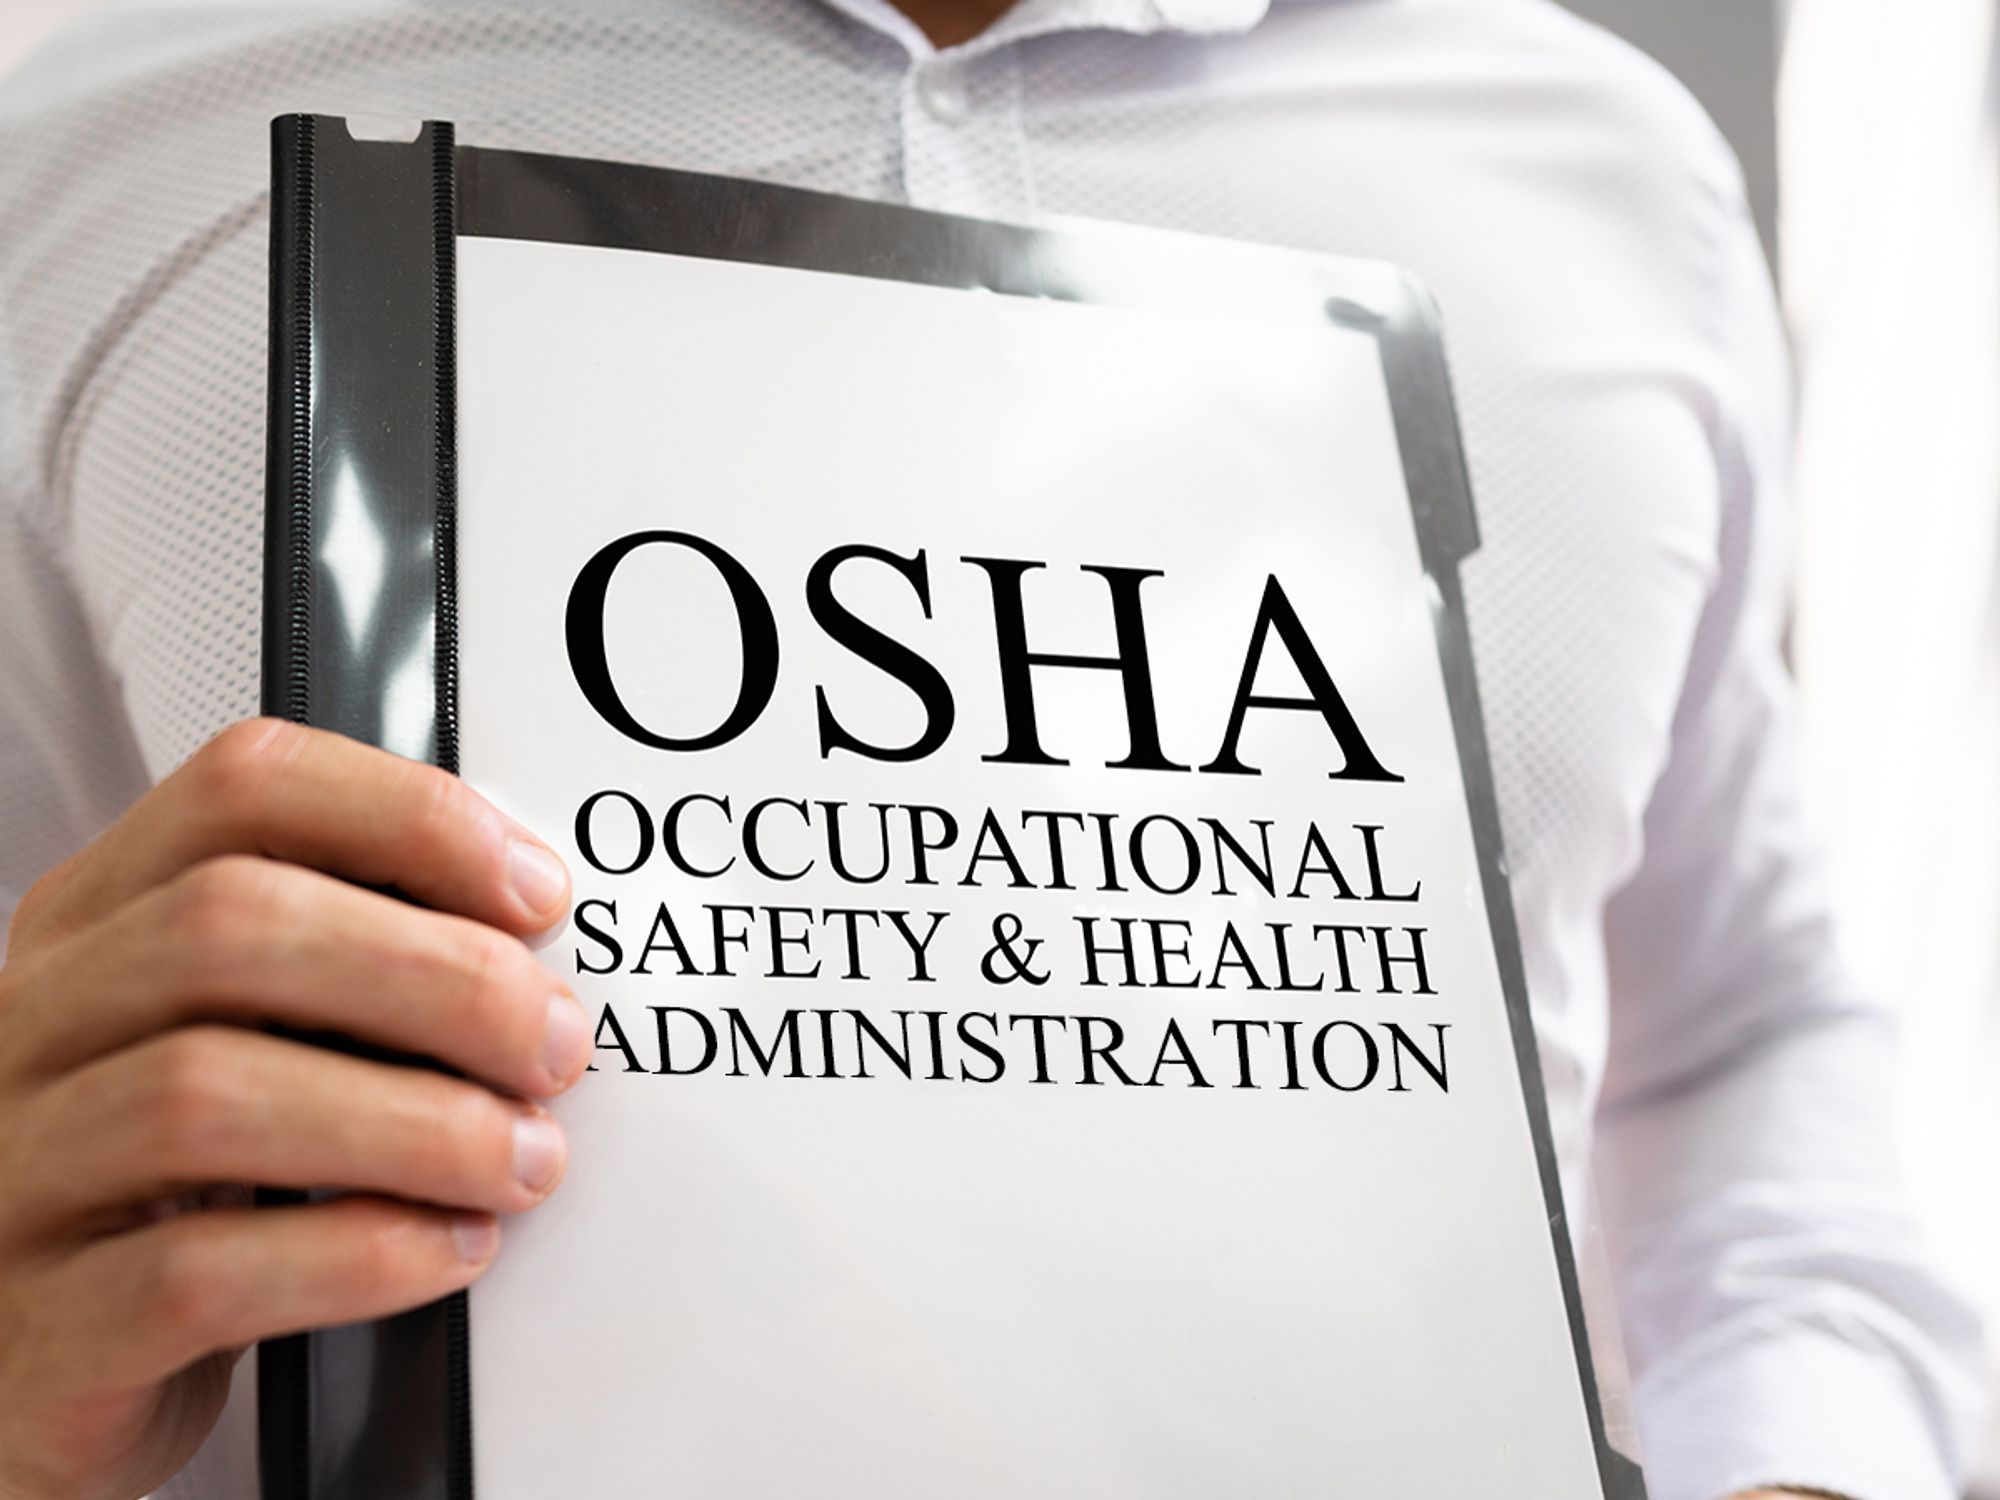 Application of the OSHA standard